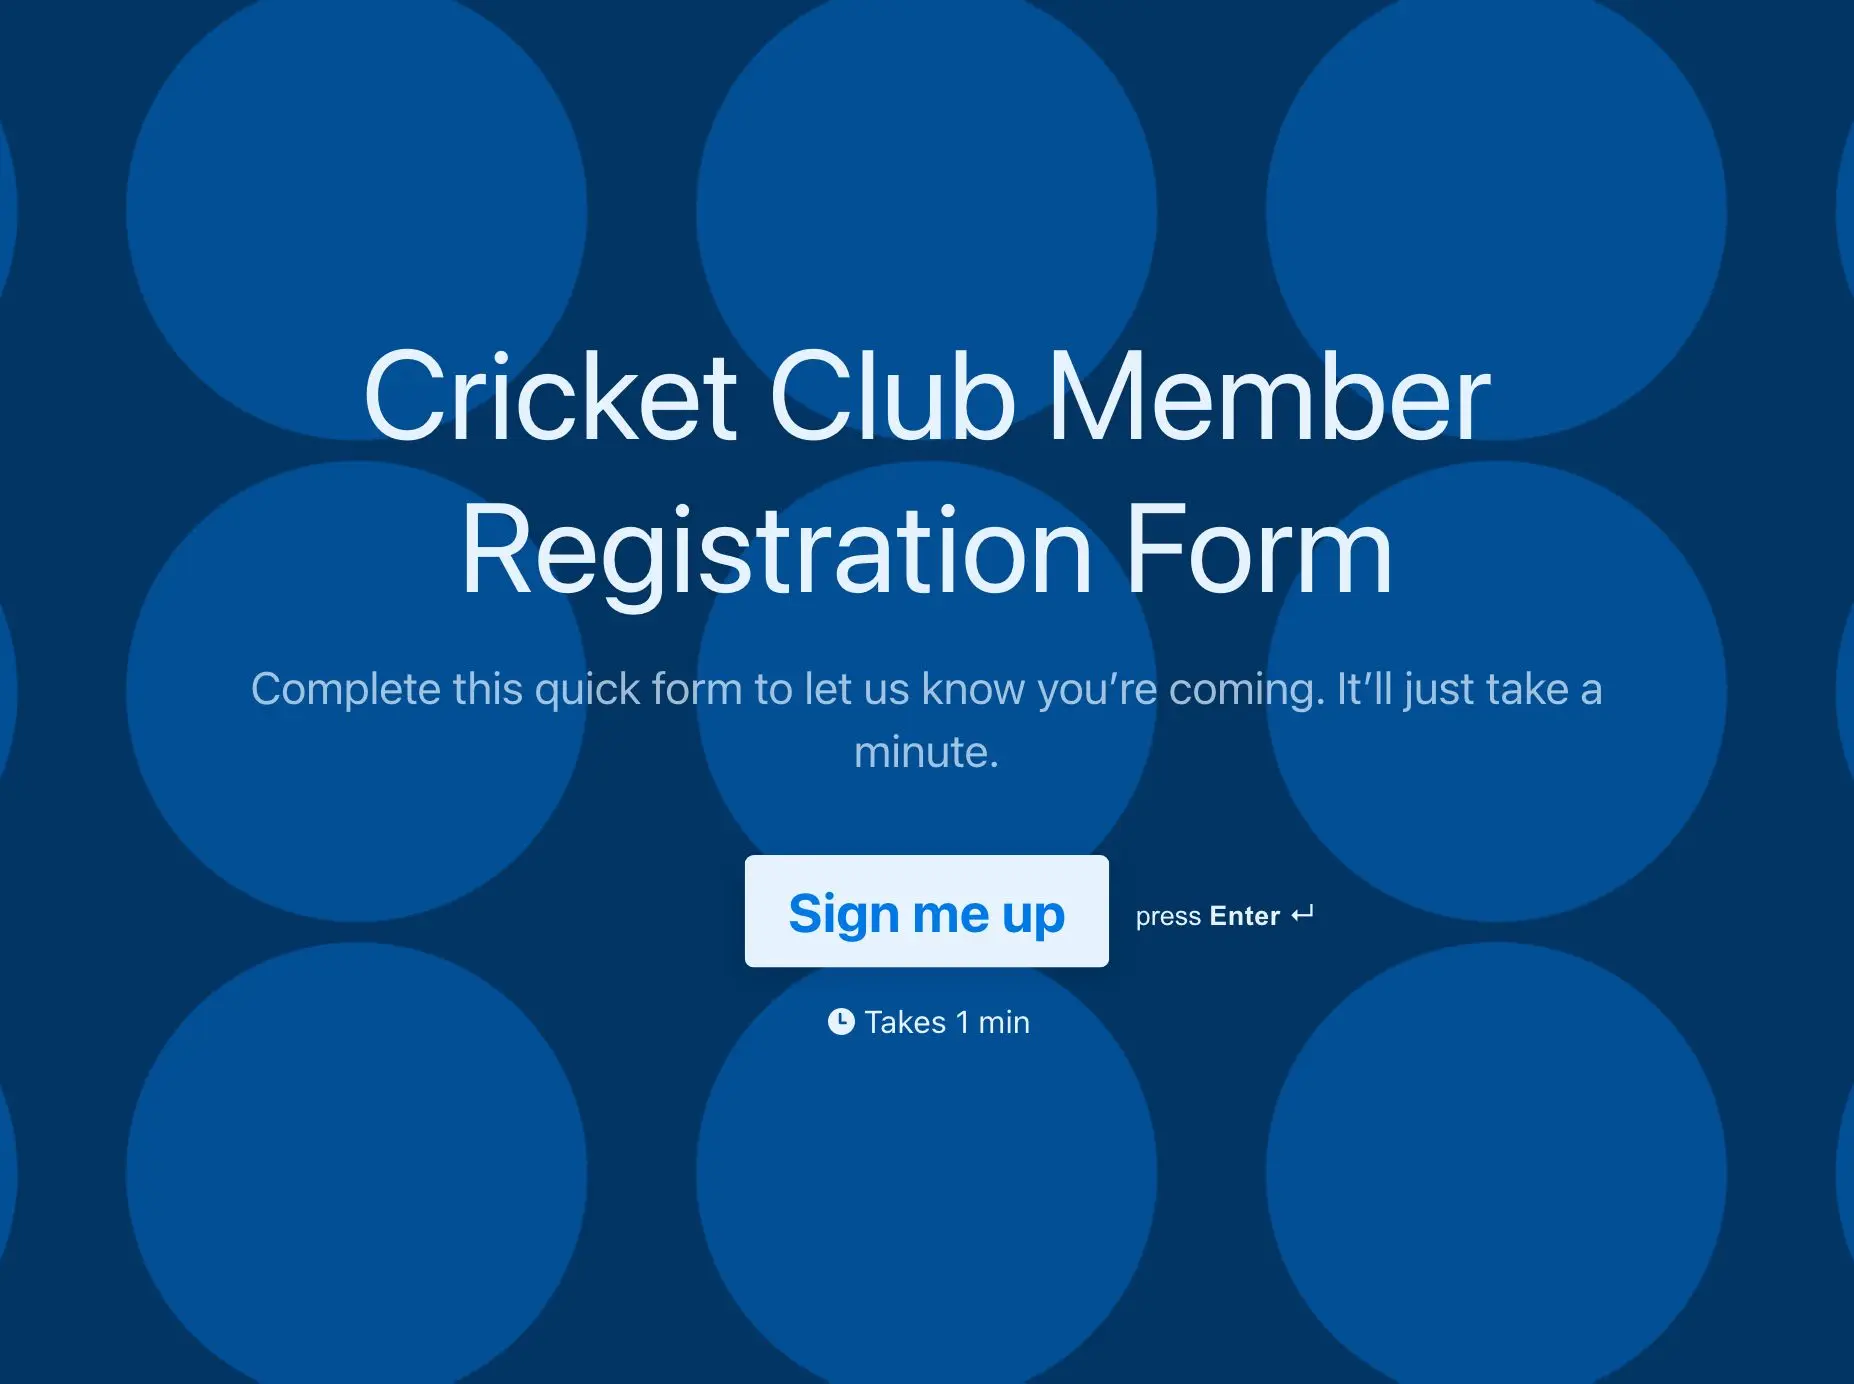 Cricket Club Member Registration Form Template Hero